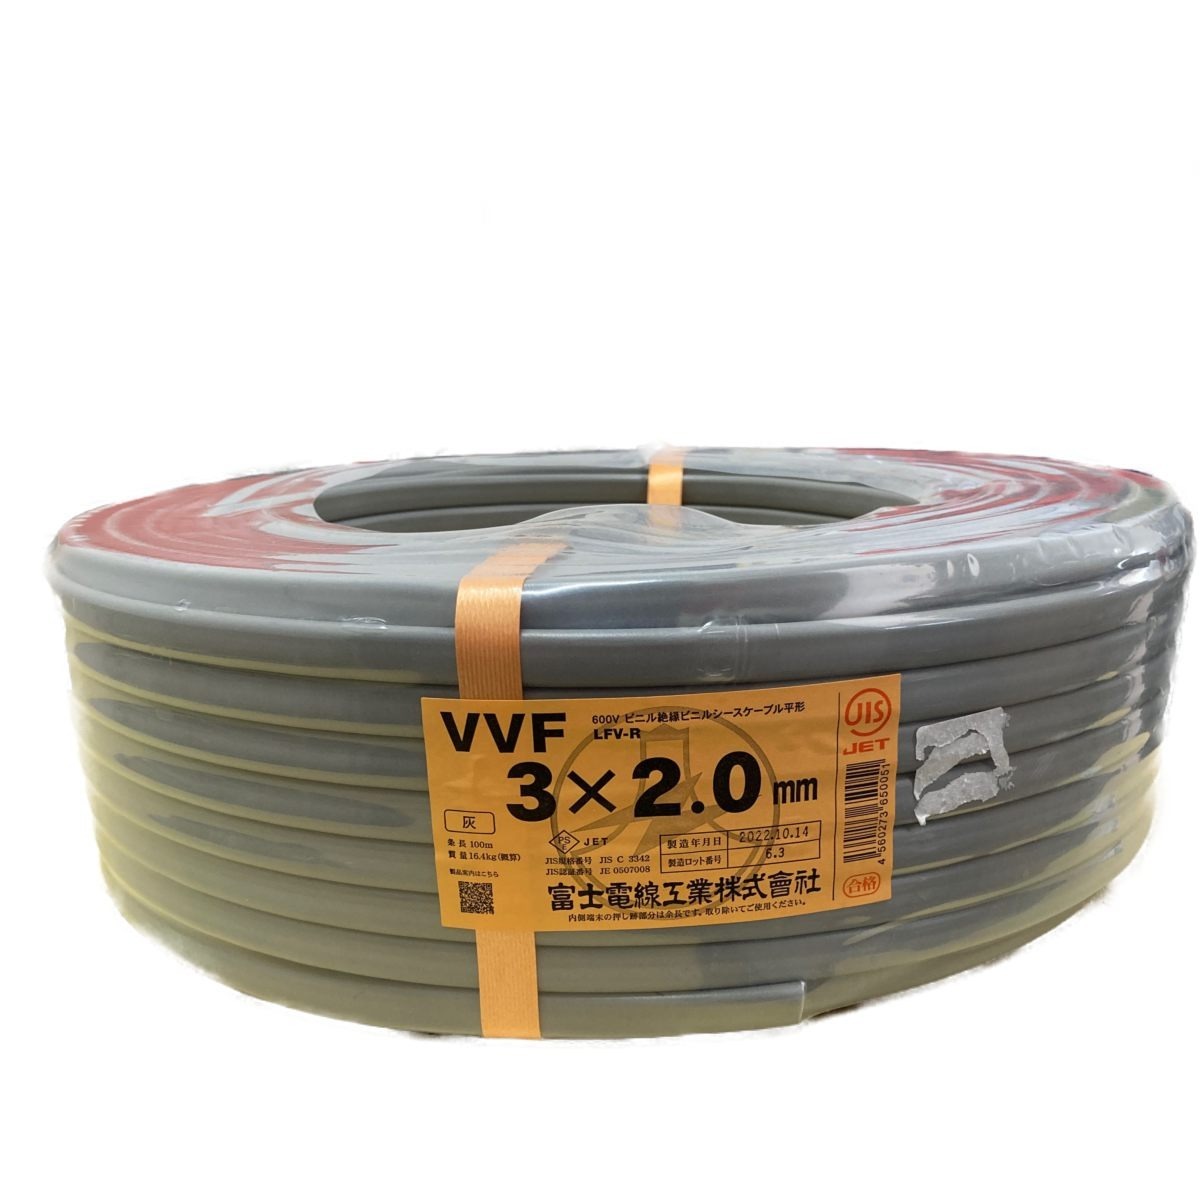 VVF 2×2.0mm 100M 富士電線工業